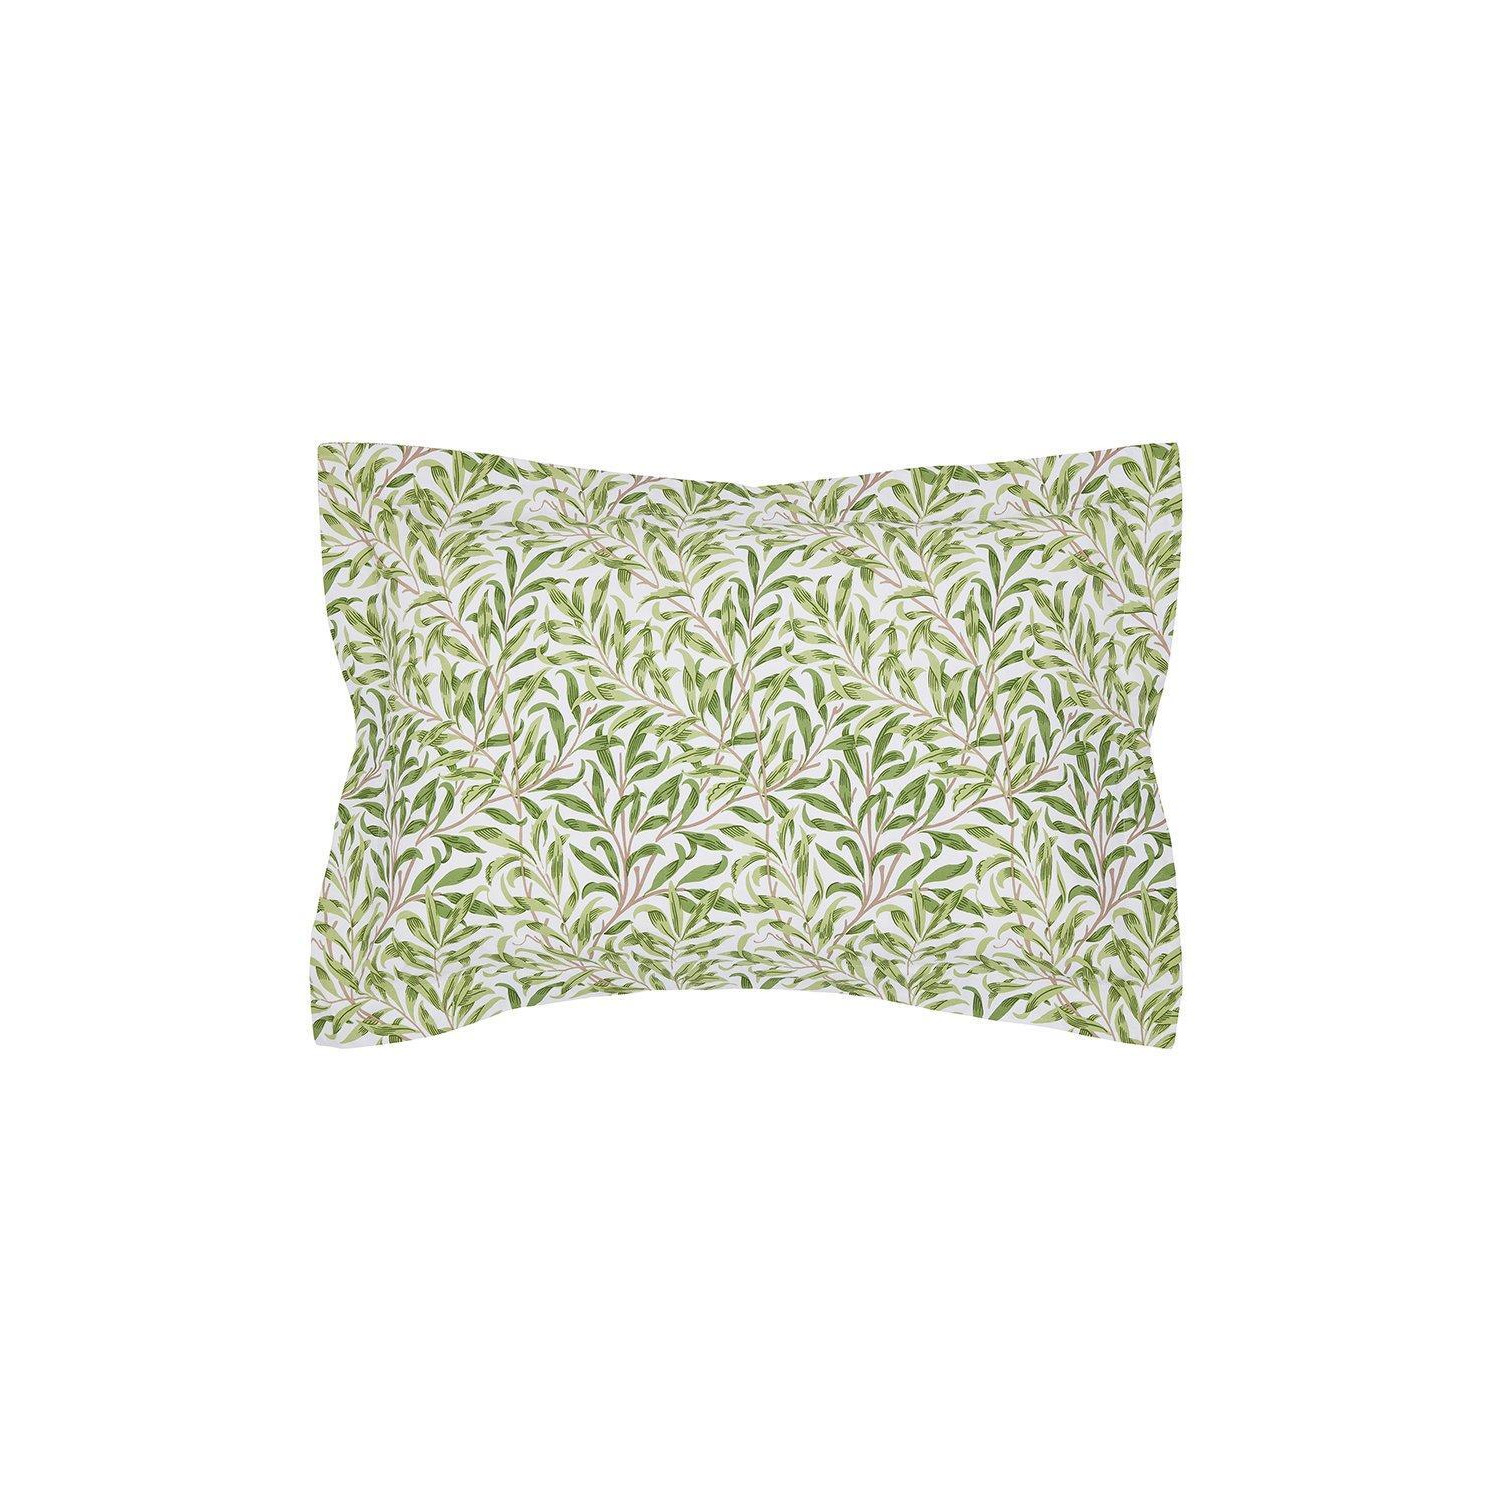 'Willow Bough' Oxford Pillowcase - image 1